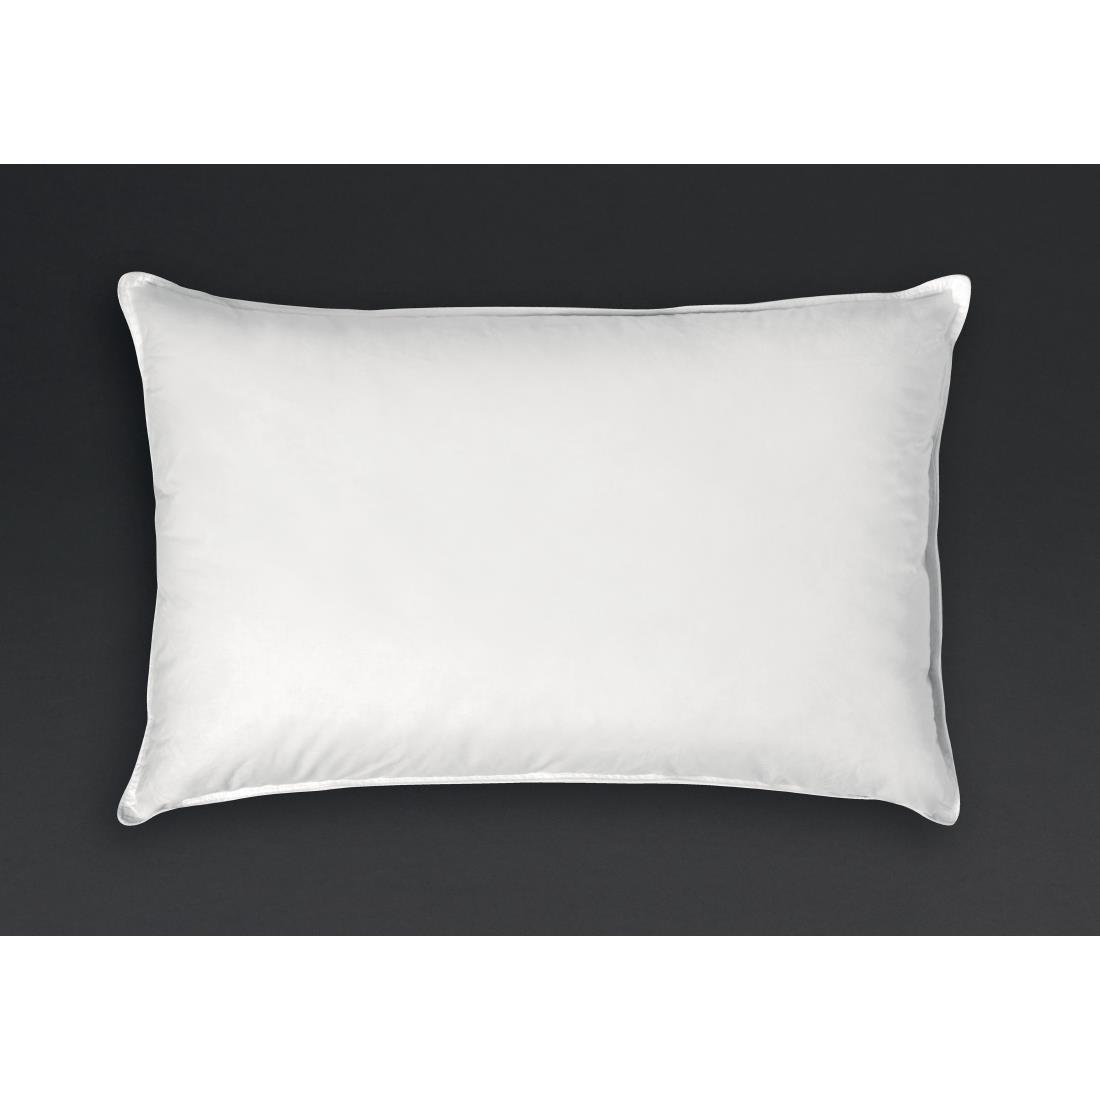 Mitre Comfort Jemima Pillow Soft - GT739  - 2